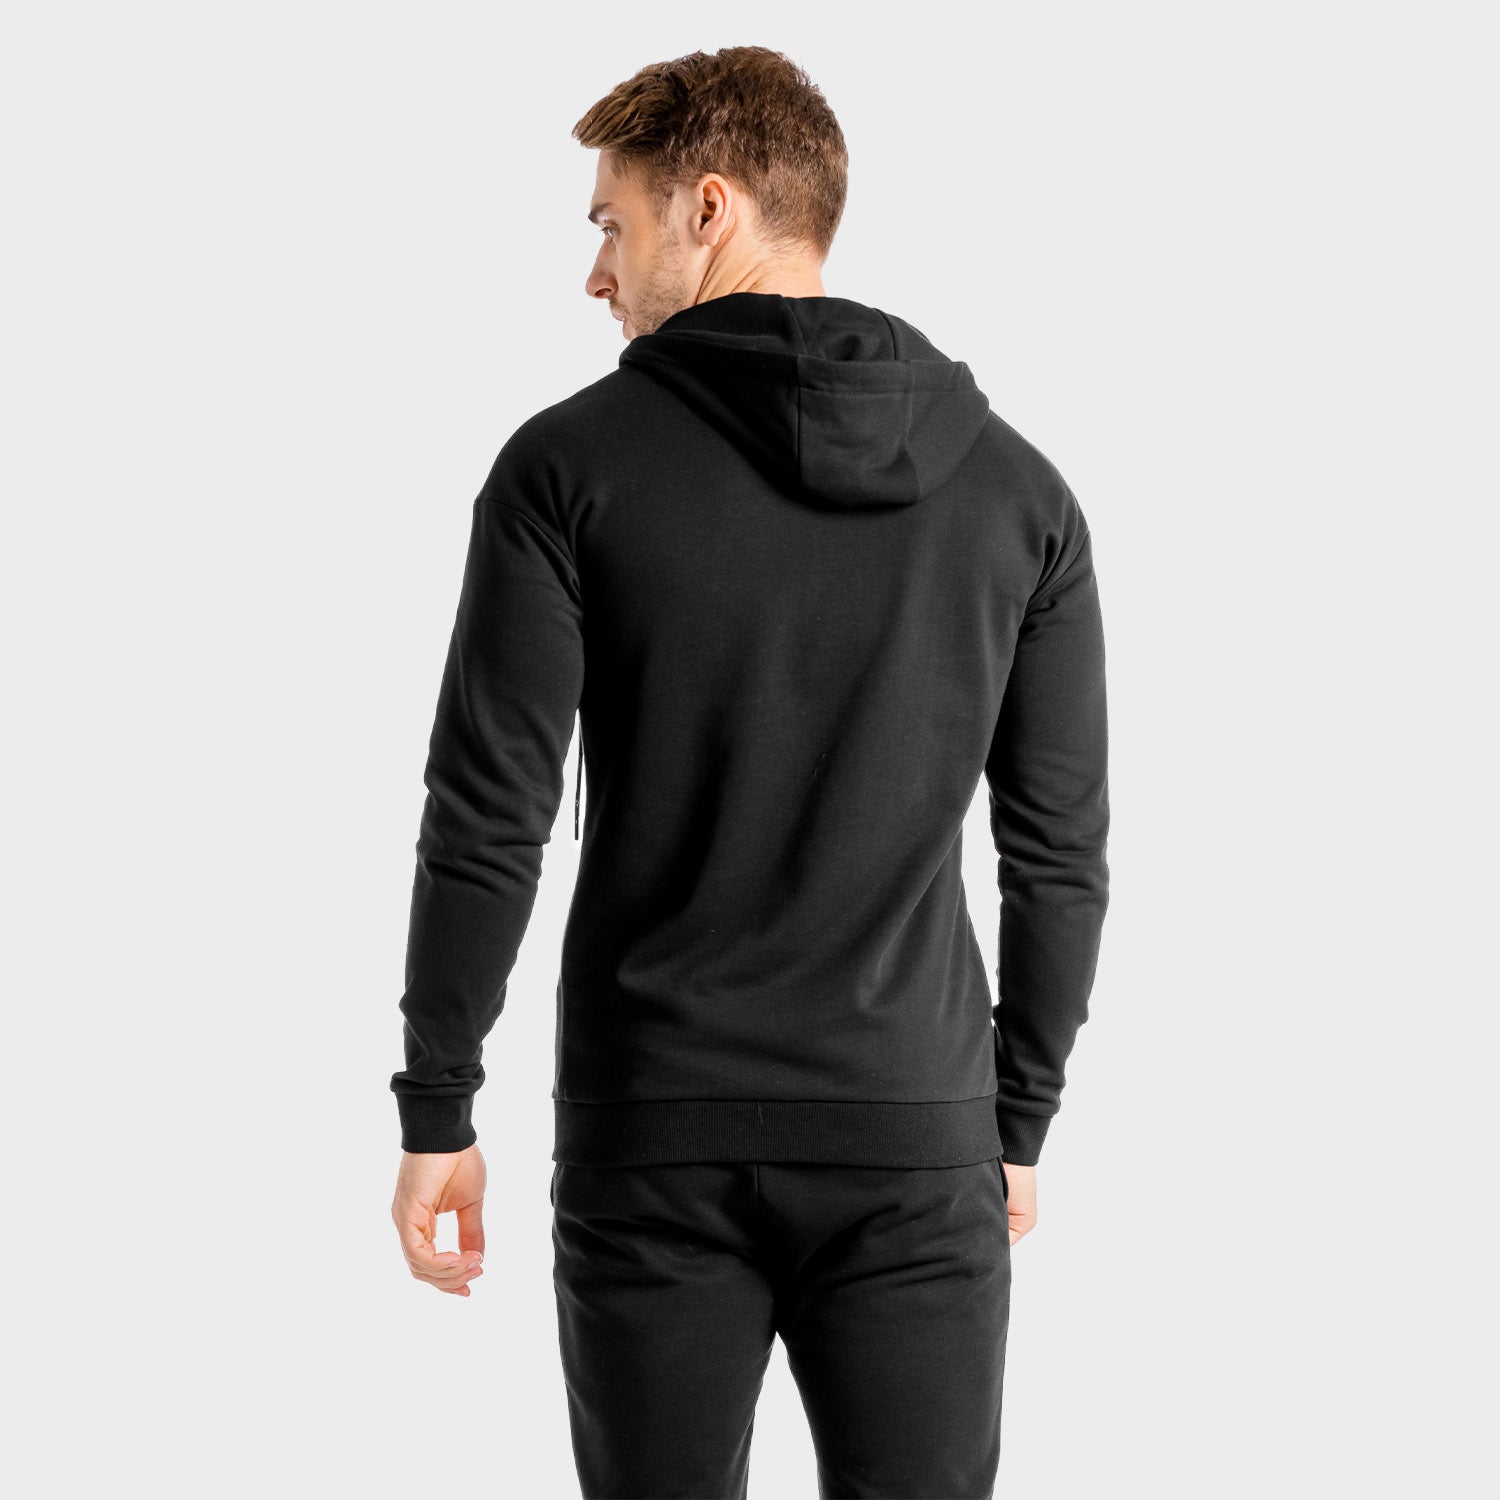 squatwolf-gym-wear-core-zip-up-black-workout-hoodies-for-men